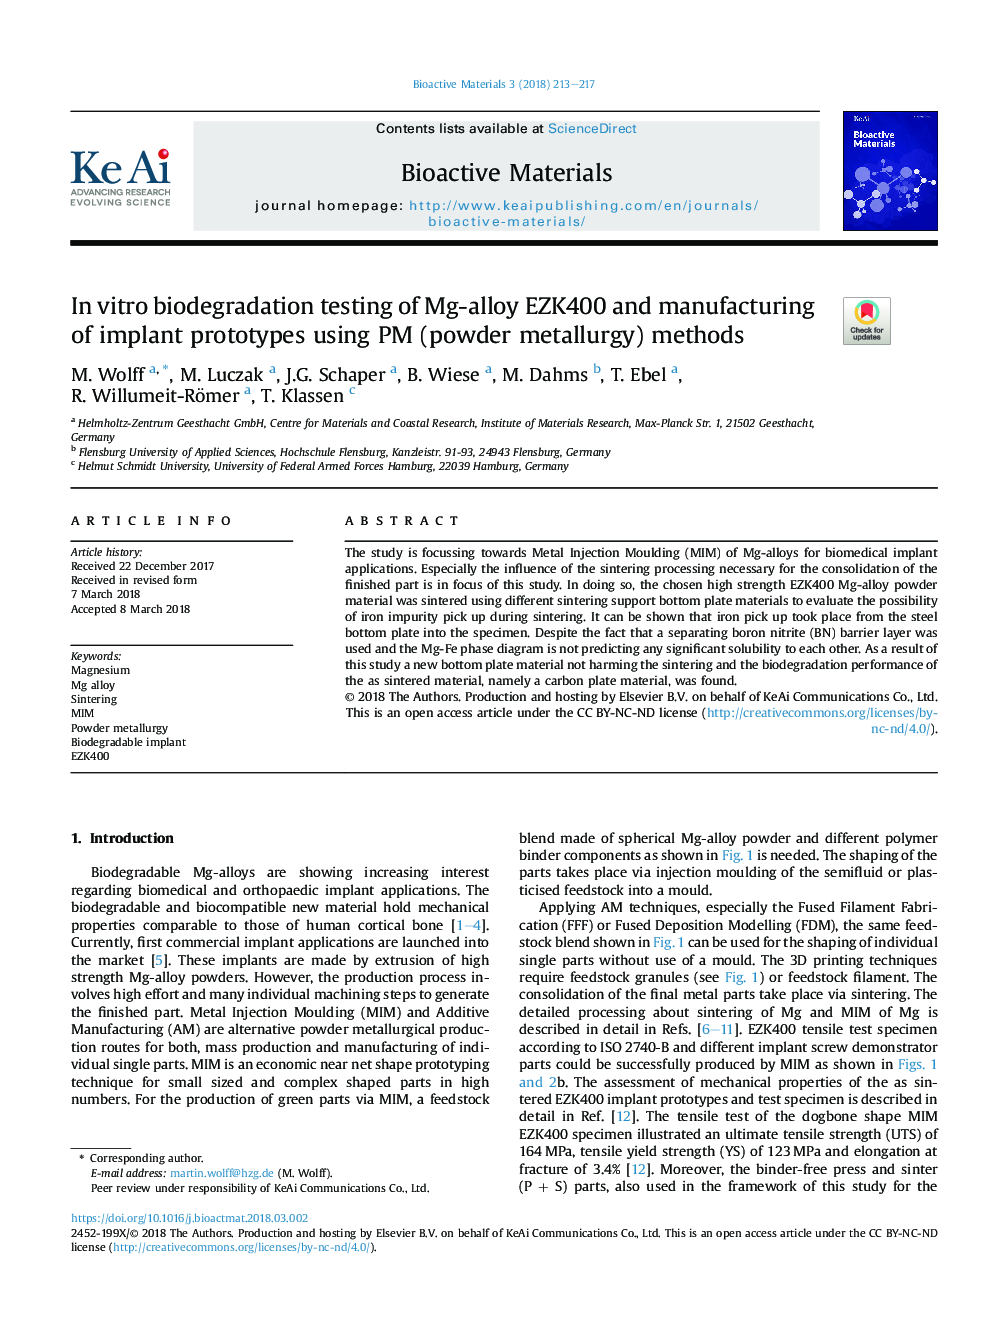 InÂ vitro biodegradation testing of Mg-alloy EZK400 and manufacturing of implant prototypes using PM (powder metallurgy) methods